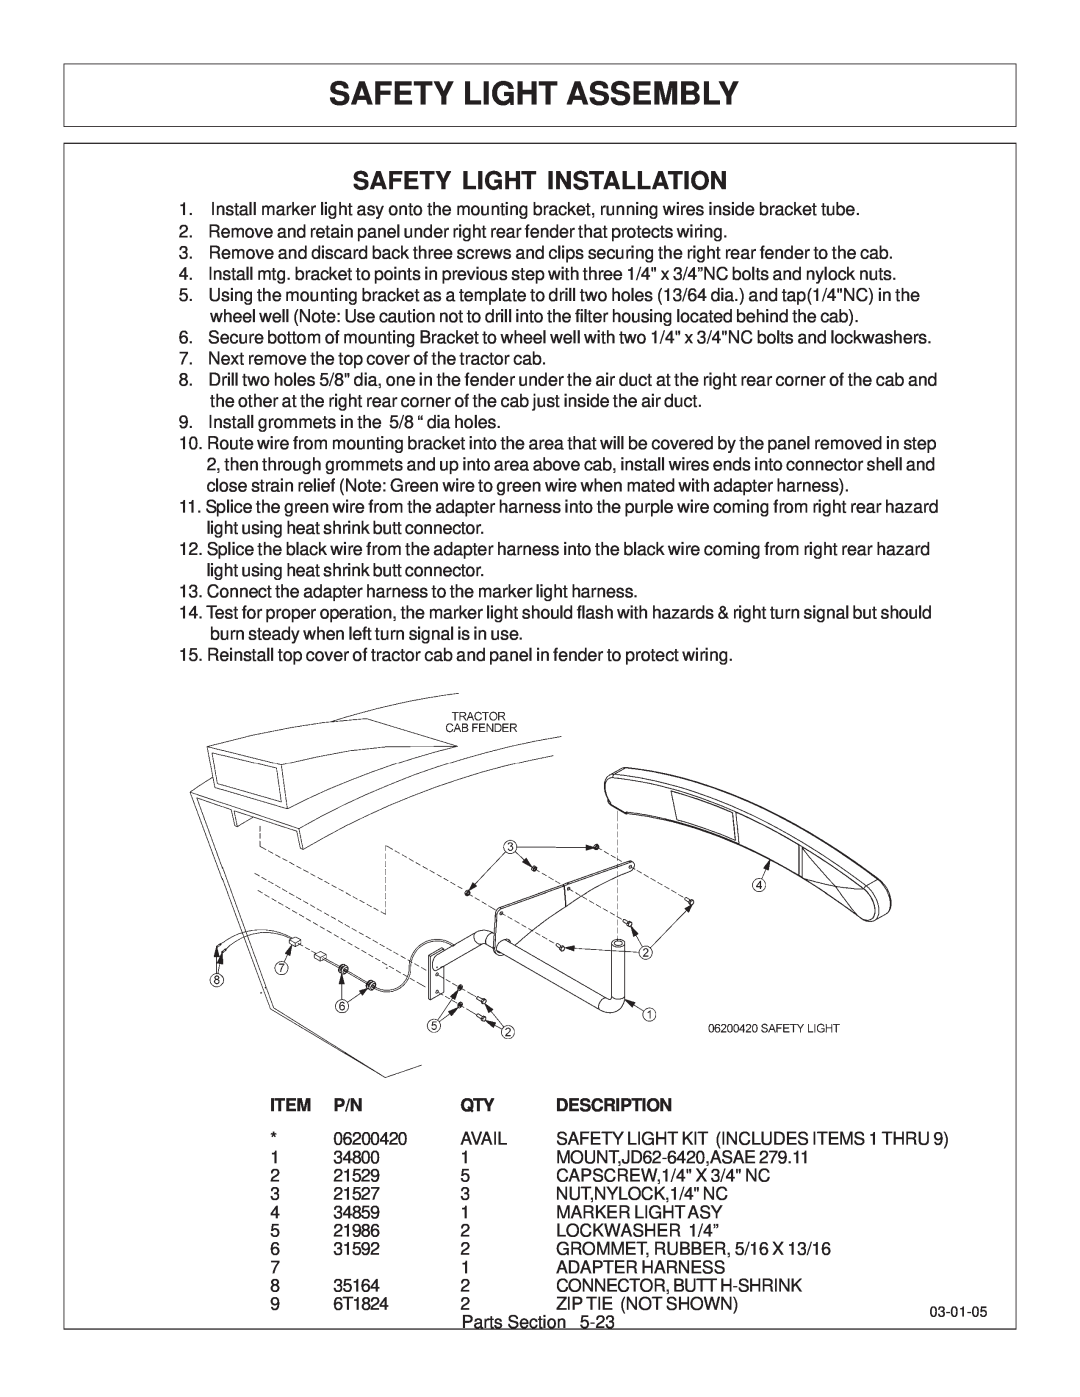 Tiger JD 62-6420 manual Safety Light Assembly, Safety Light Installation, Description 